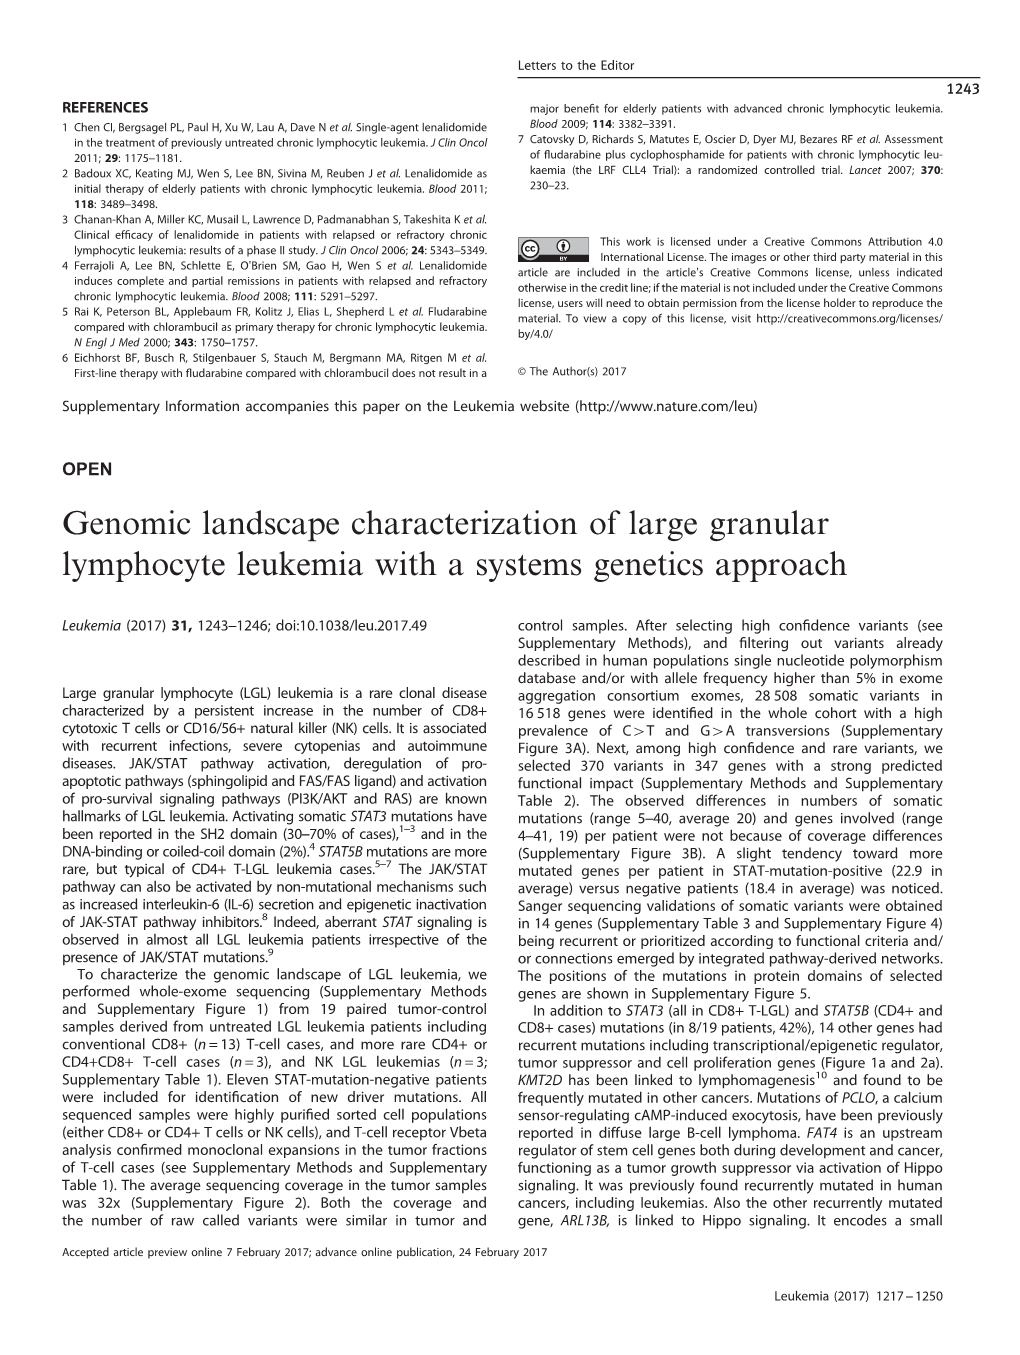 Genomic Landscape Characterization of Large Granular Lymphocyte Leukemia with a Systems Genetics Approach